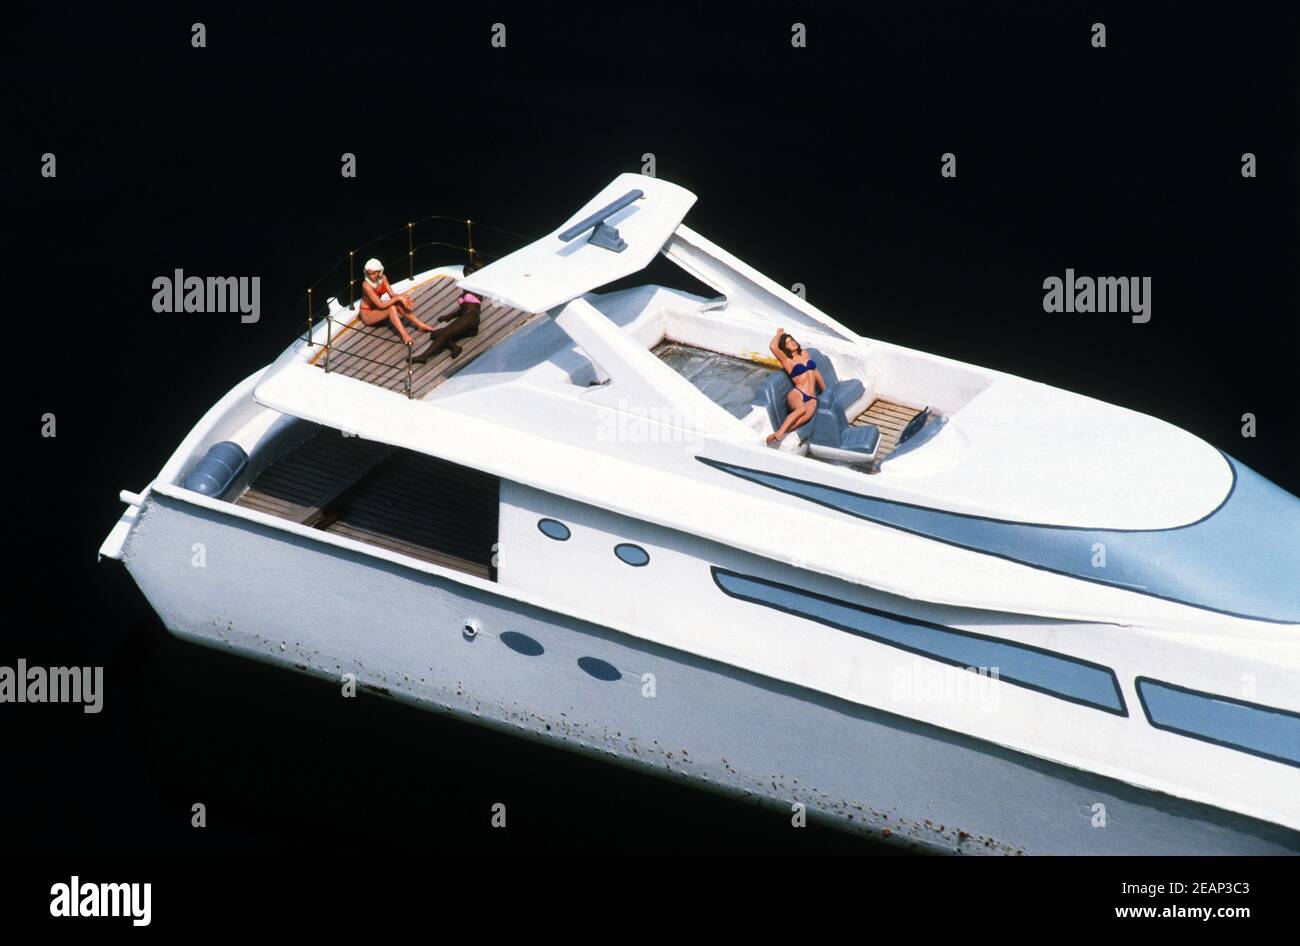 Model boat with swimsuit clad sunbathers Stock Photo